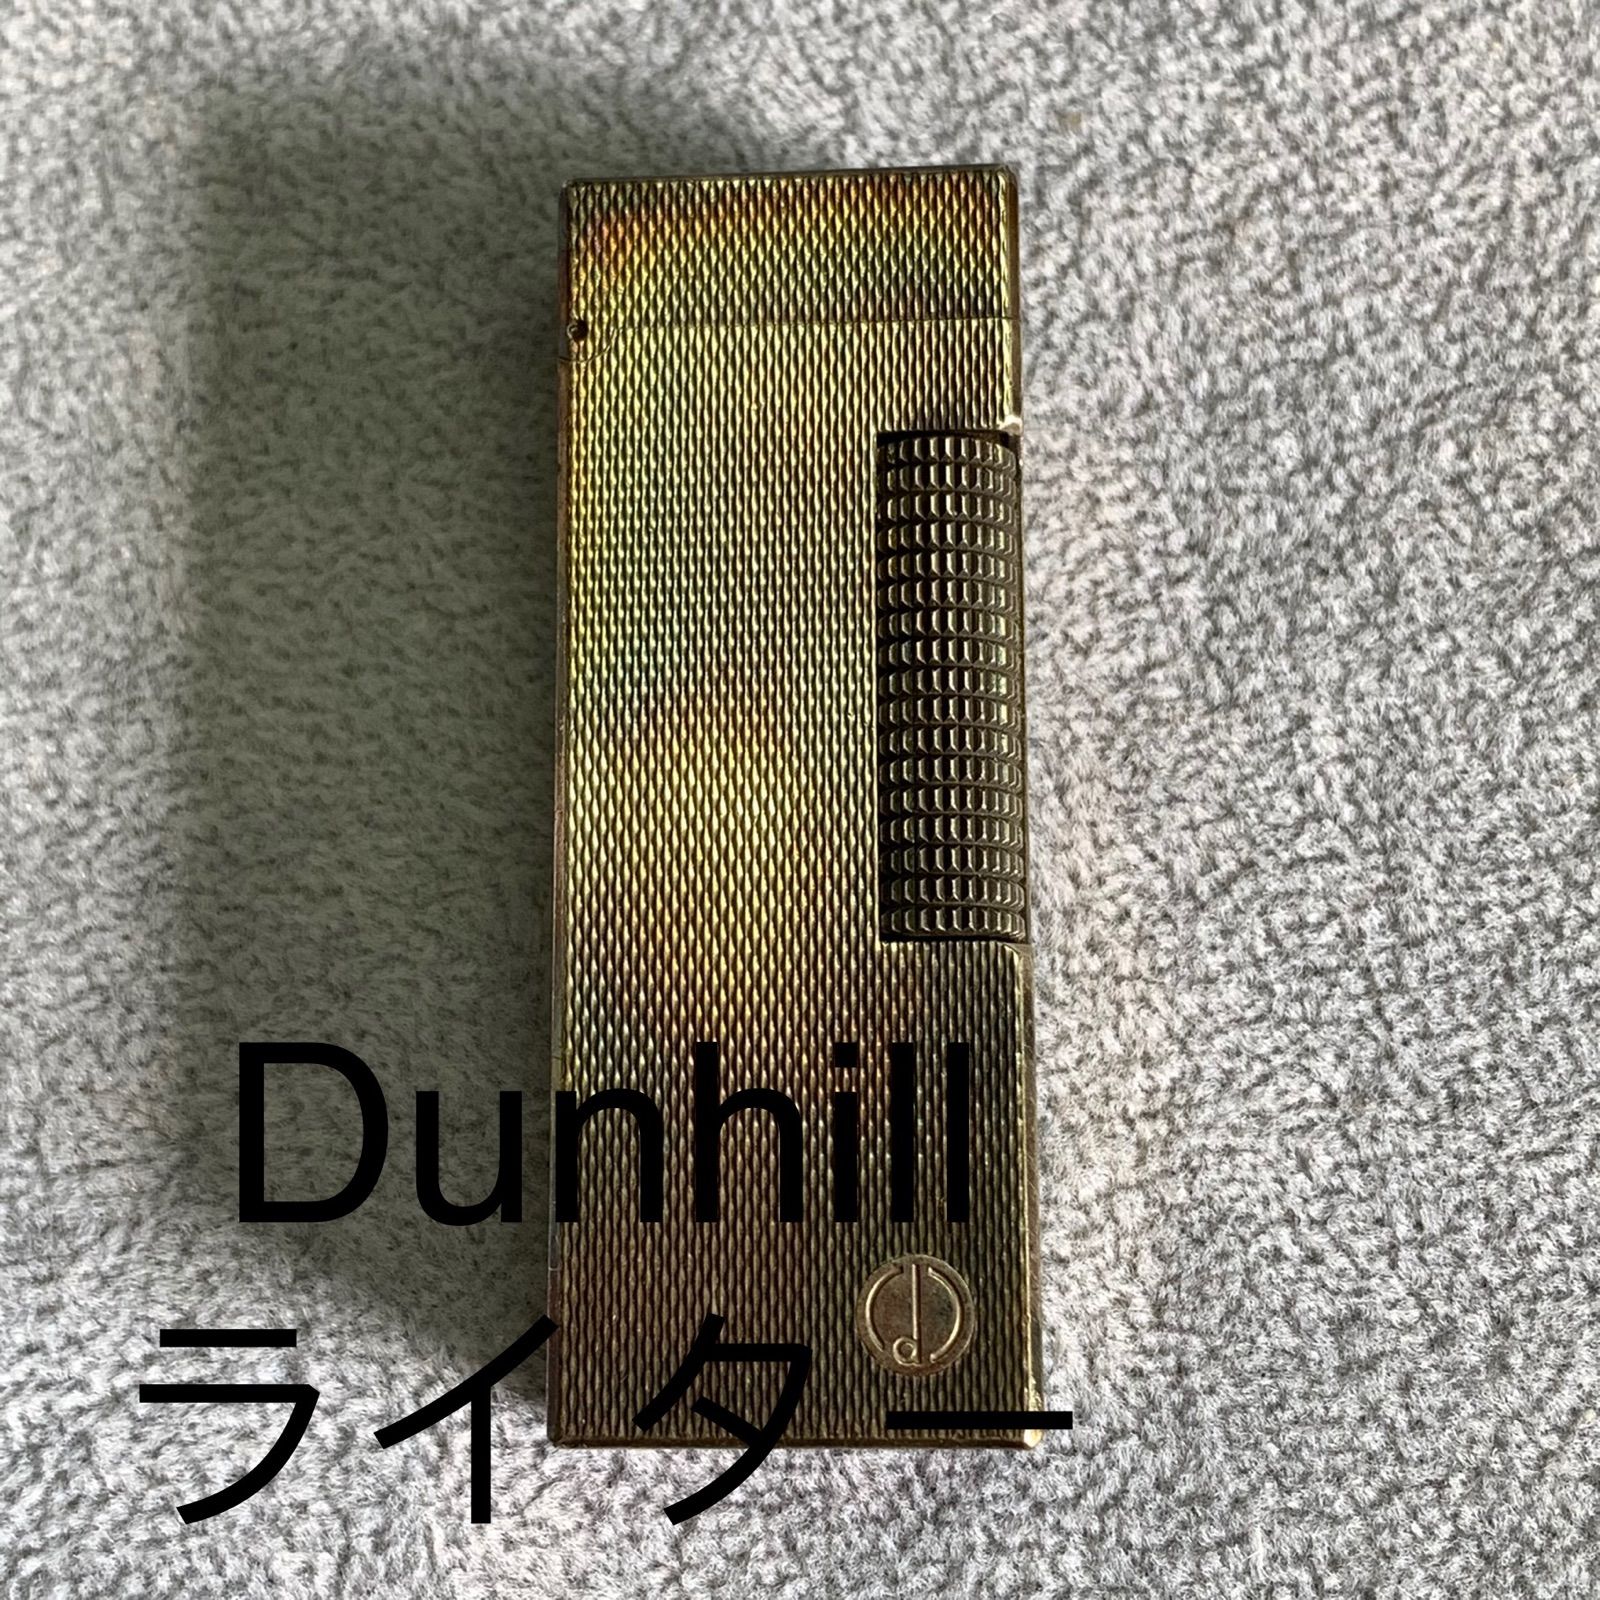 Dunhill ダンヒル ライター シルバー - メルカリ